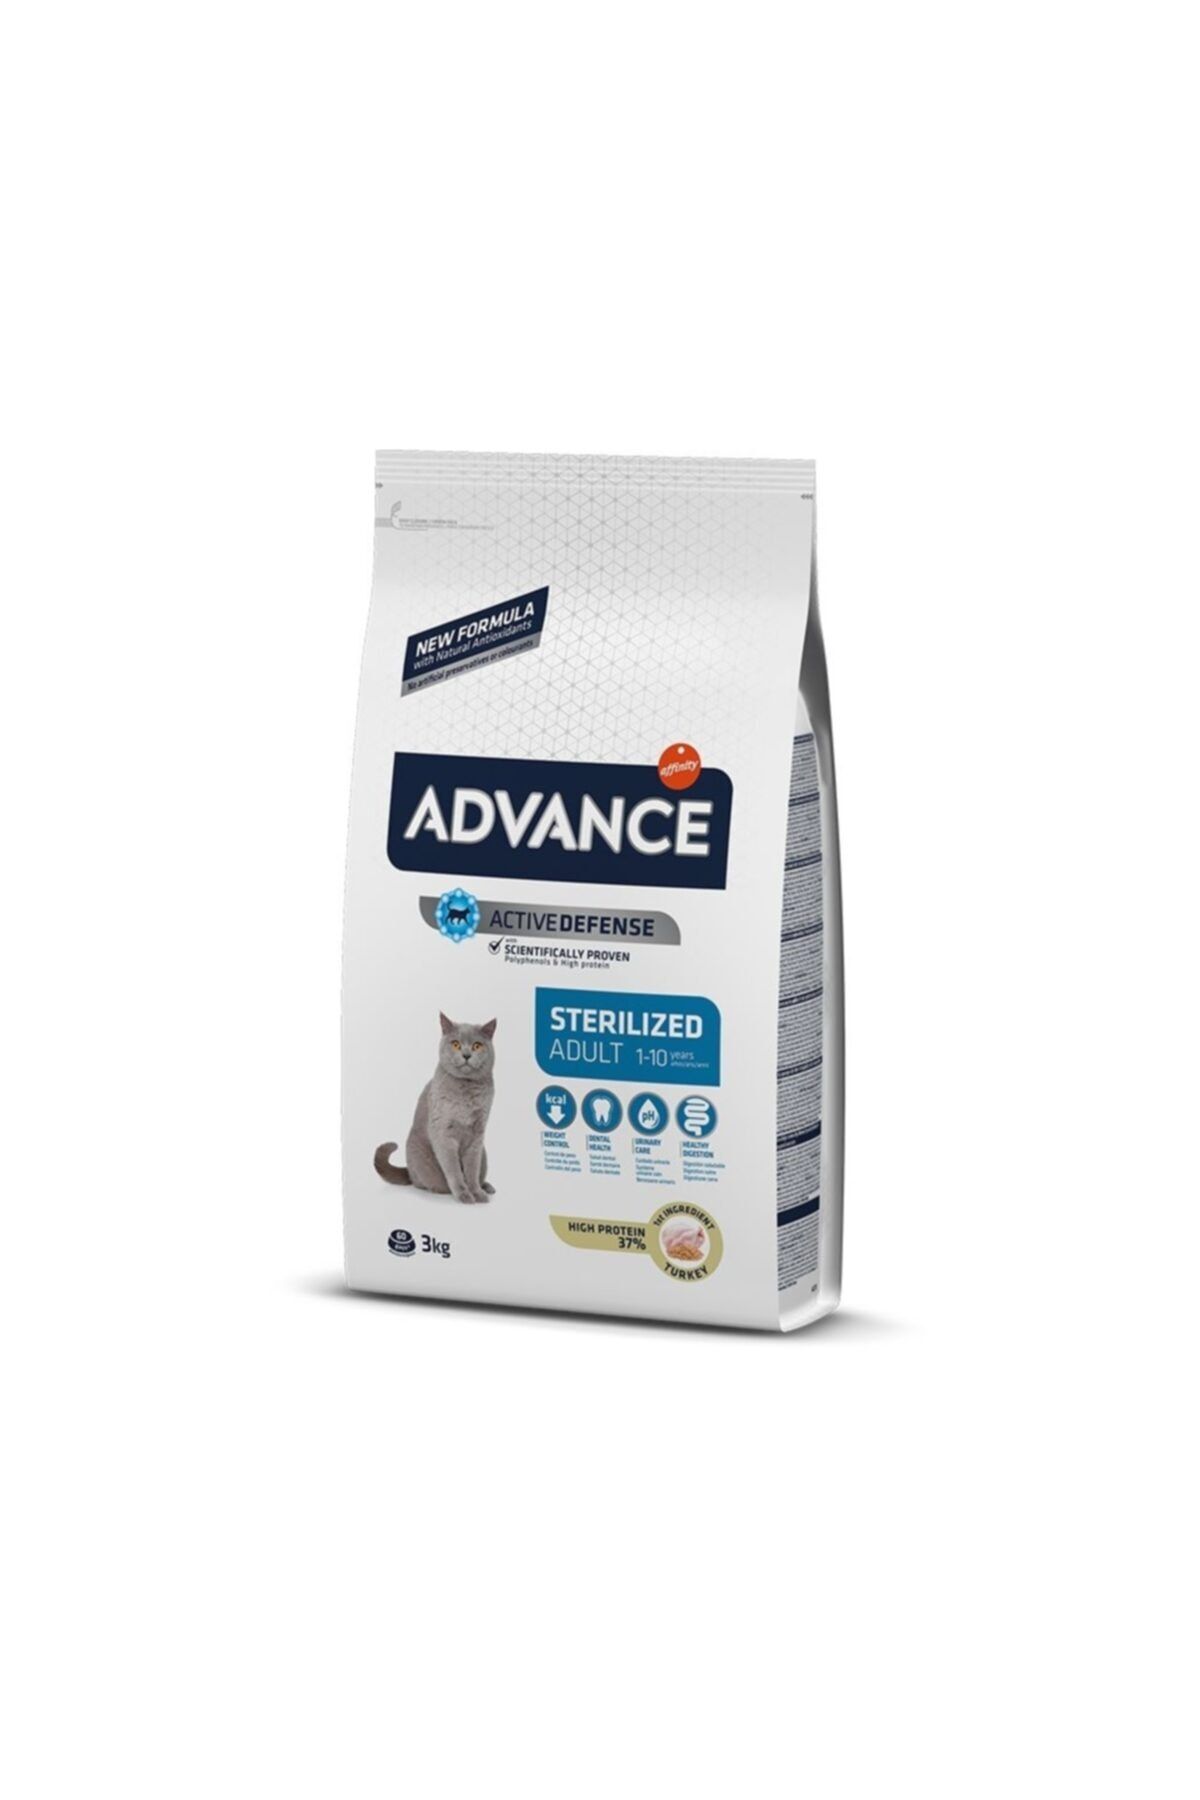 Advance Kısırlaştırılmış Kedi Hindili Kedi Maması 3 kg Fiyatı